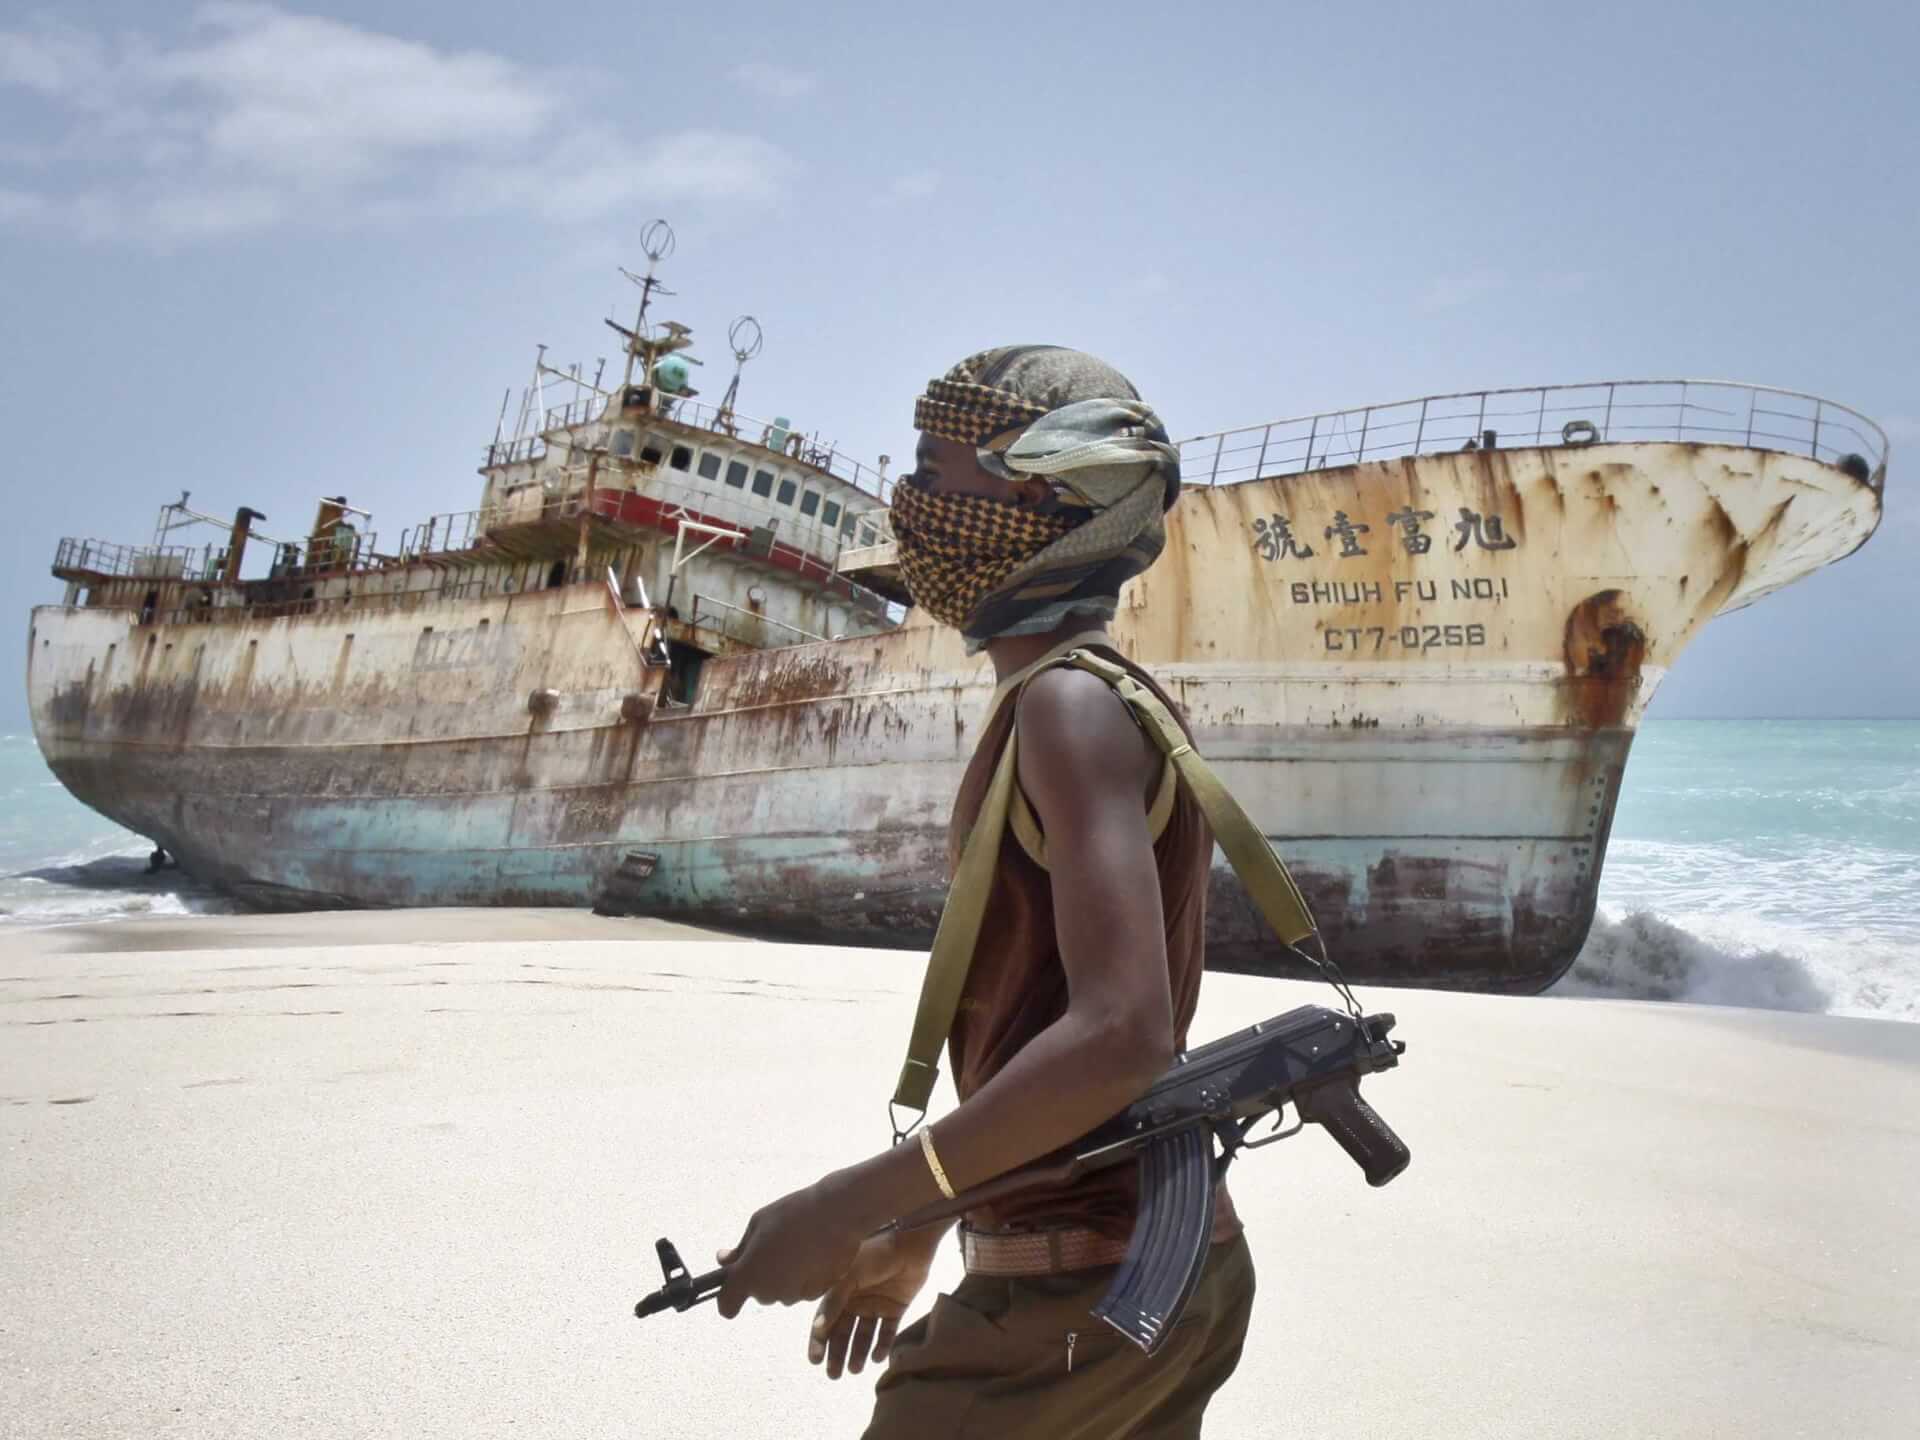 As Somali Pirates Resurface, Navies Should Heighten Vigilance in Indian Ocean: Int’l Maritime Bureau Director Tells Statecraft